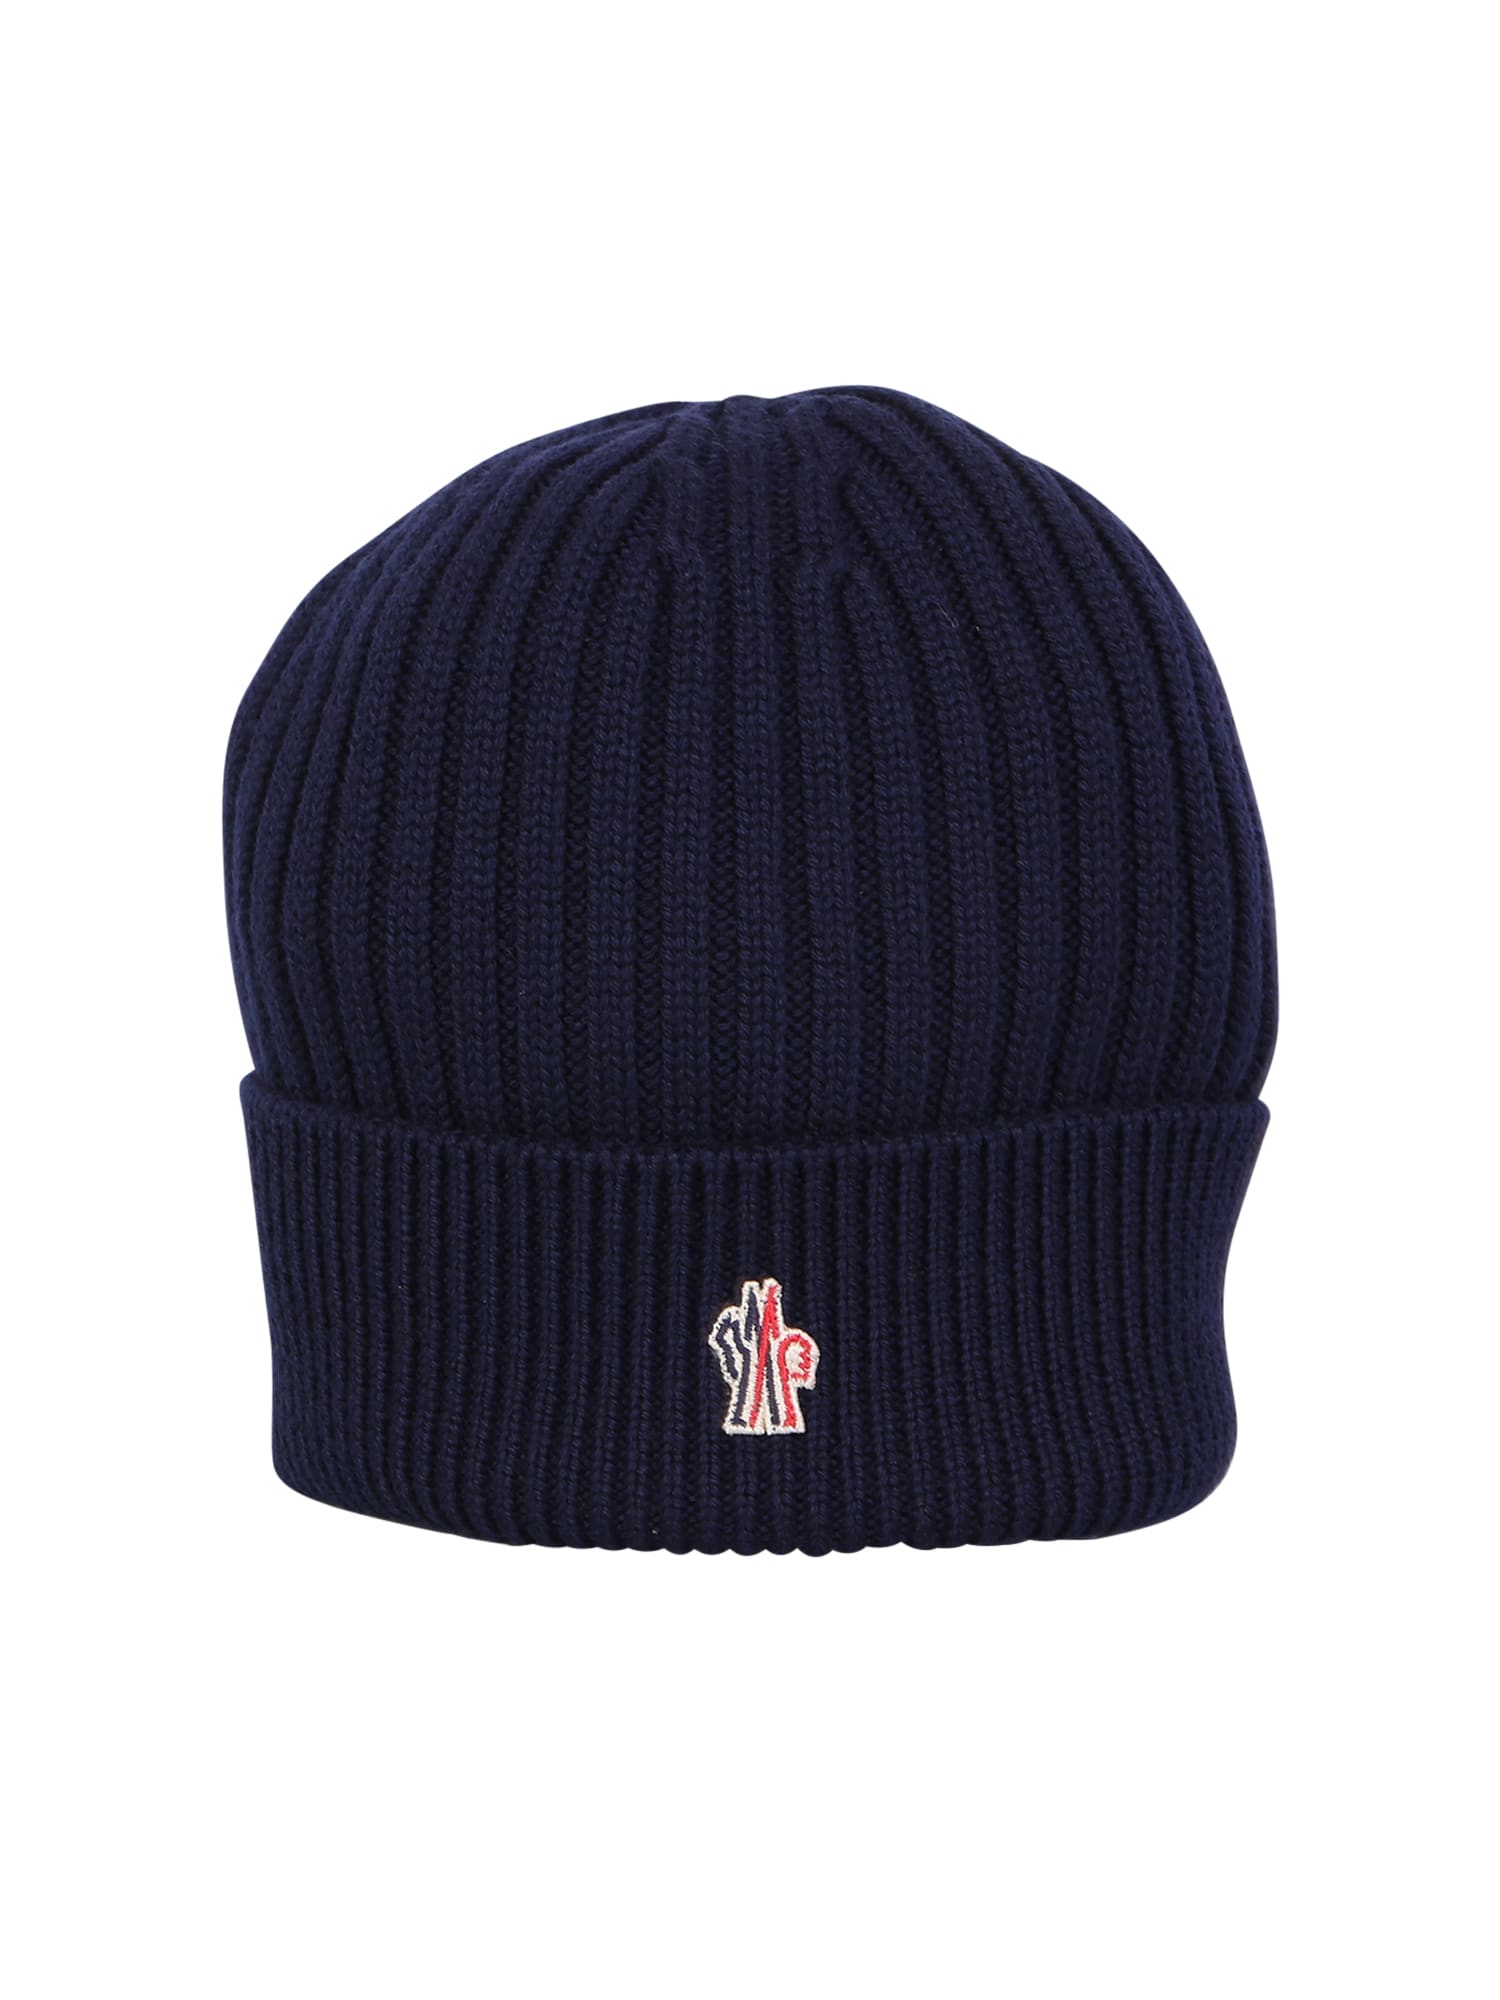 Moncler Grenoble Blue Ribbed Beanie Hat